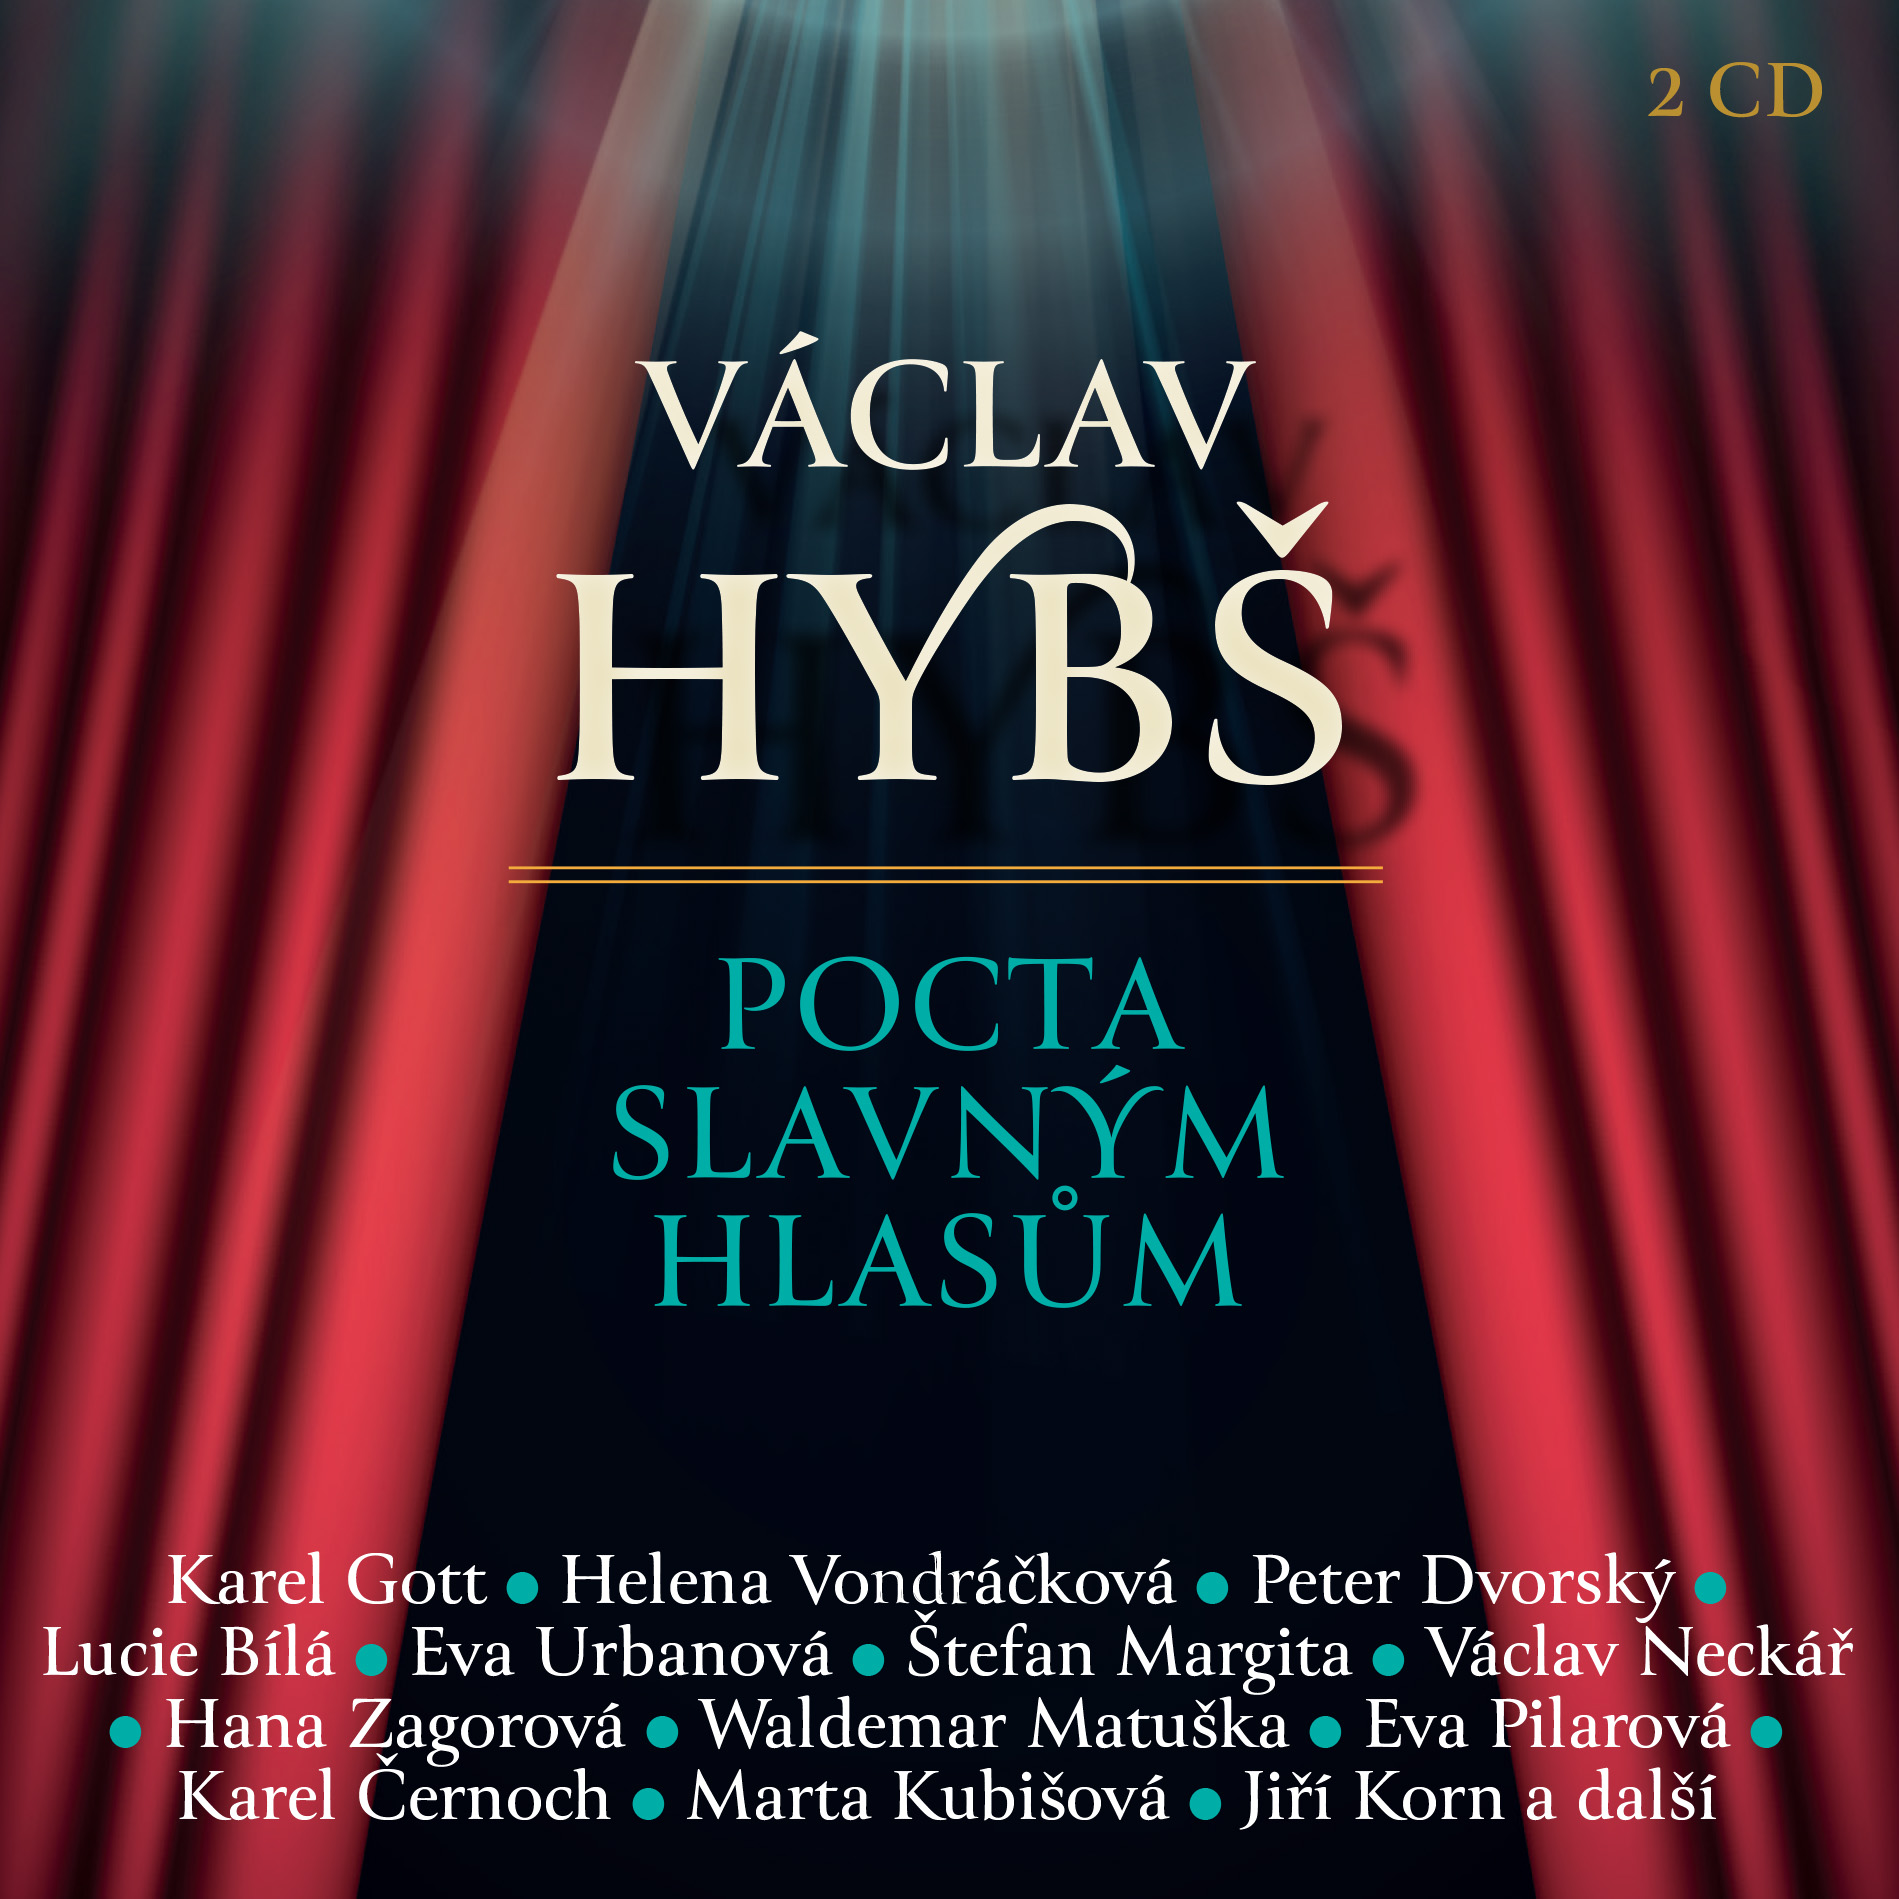 CD Shop - HYBS VACLAV POCTA SLAVNYM HLASUM